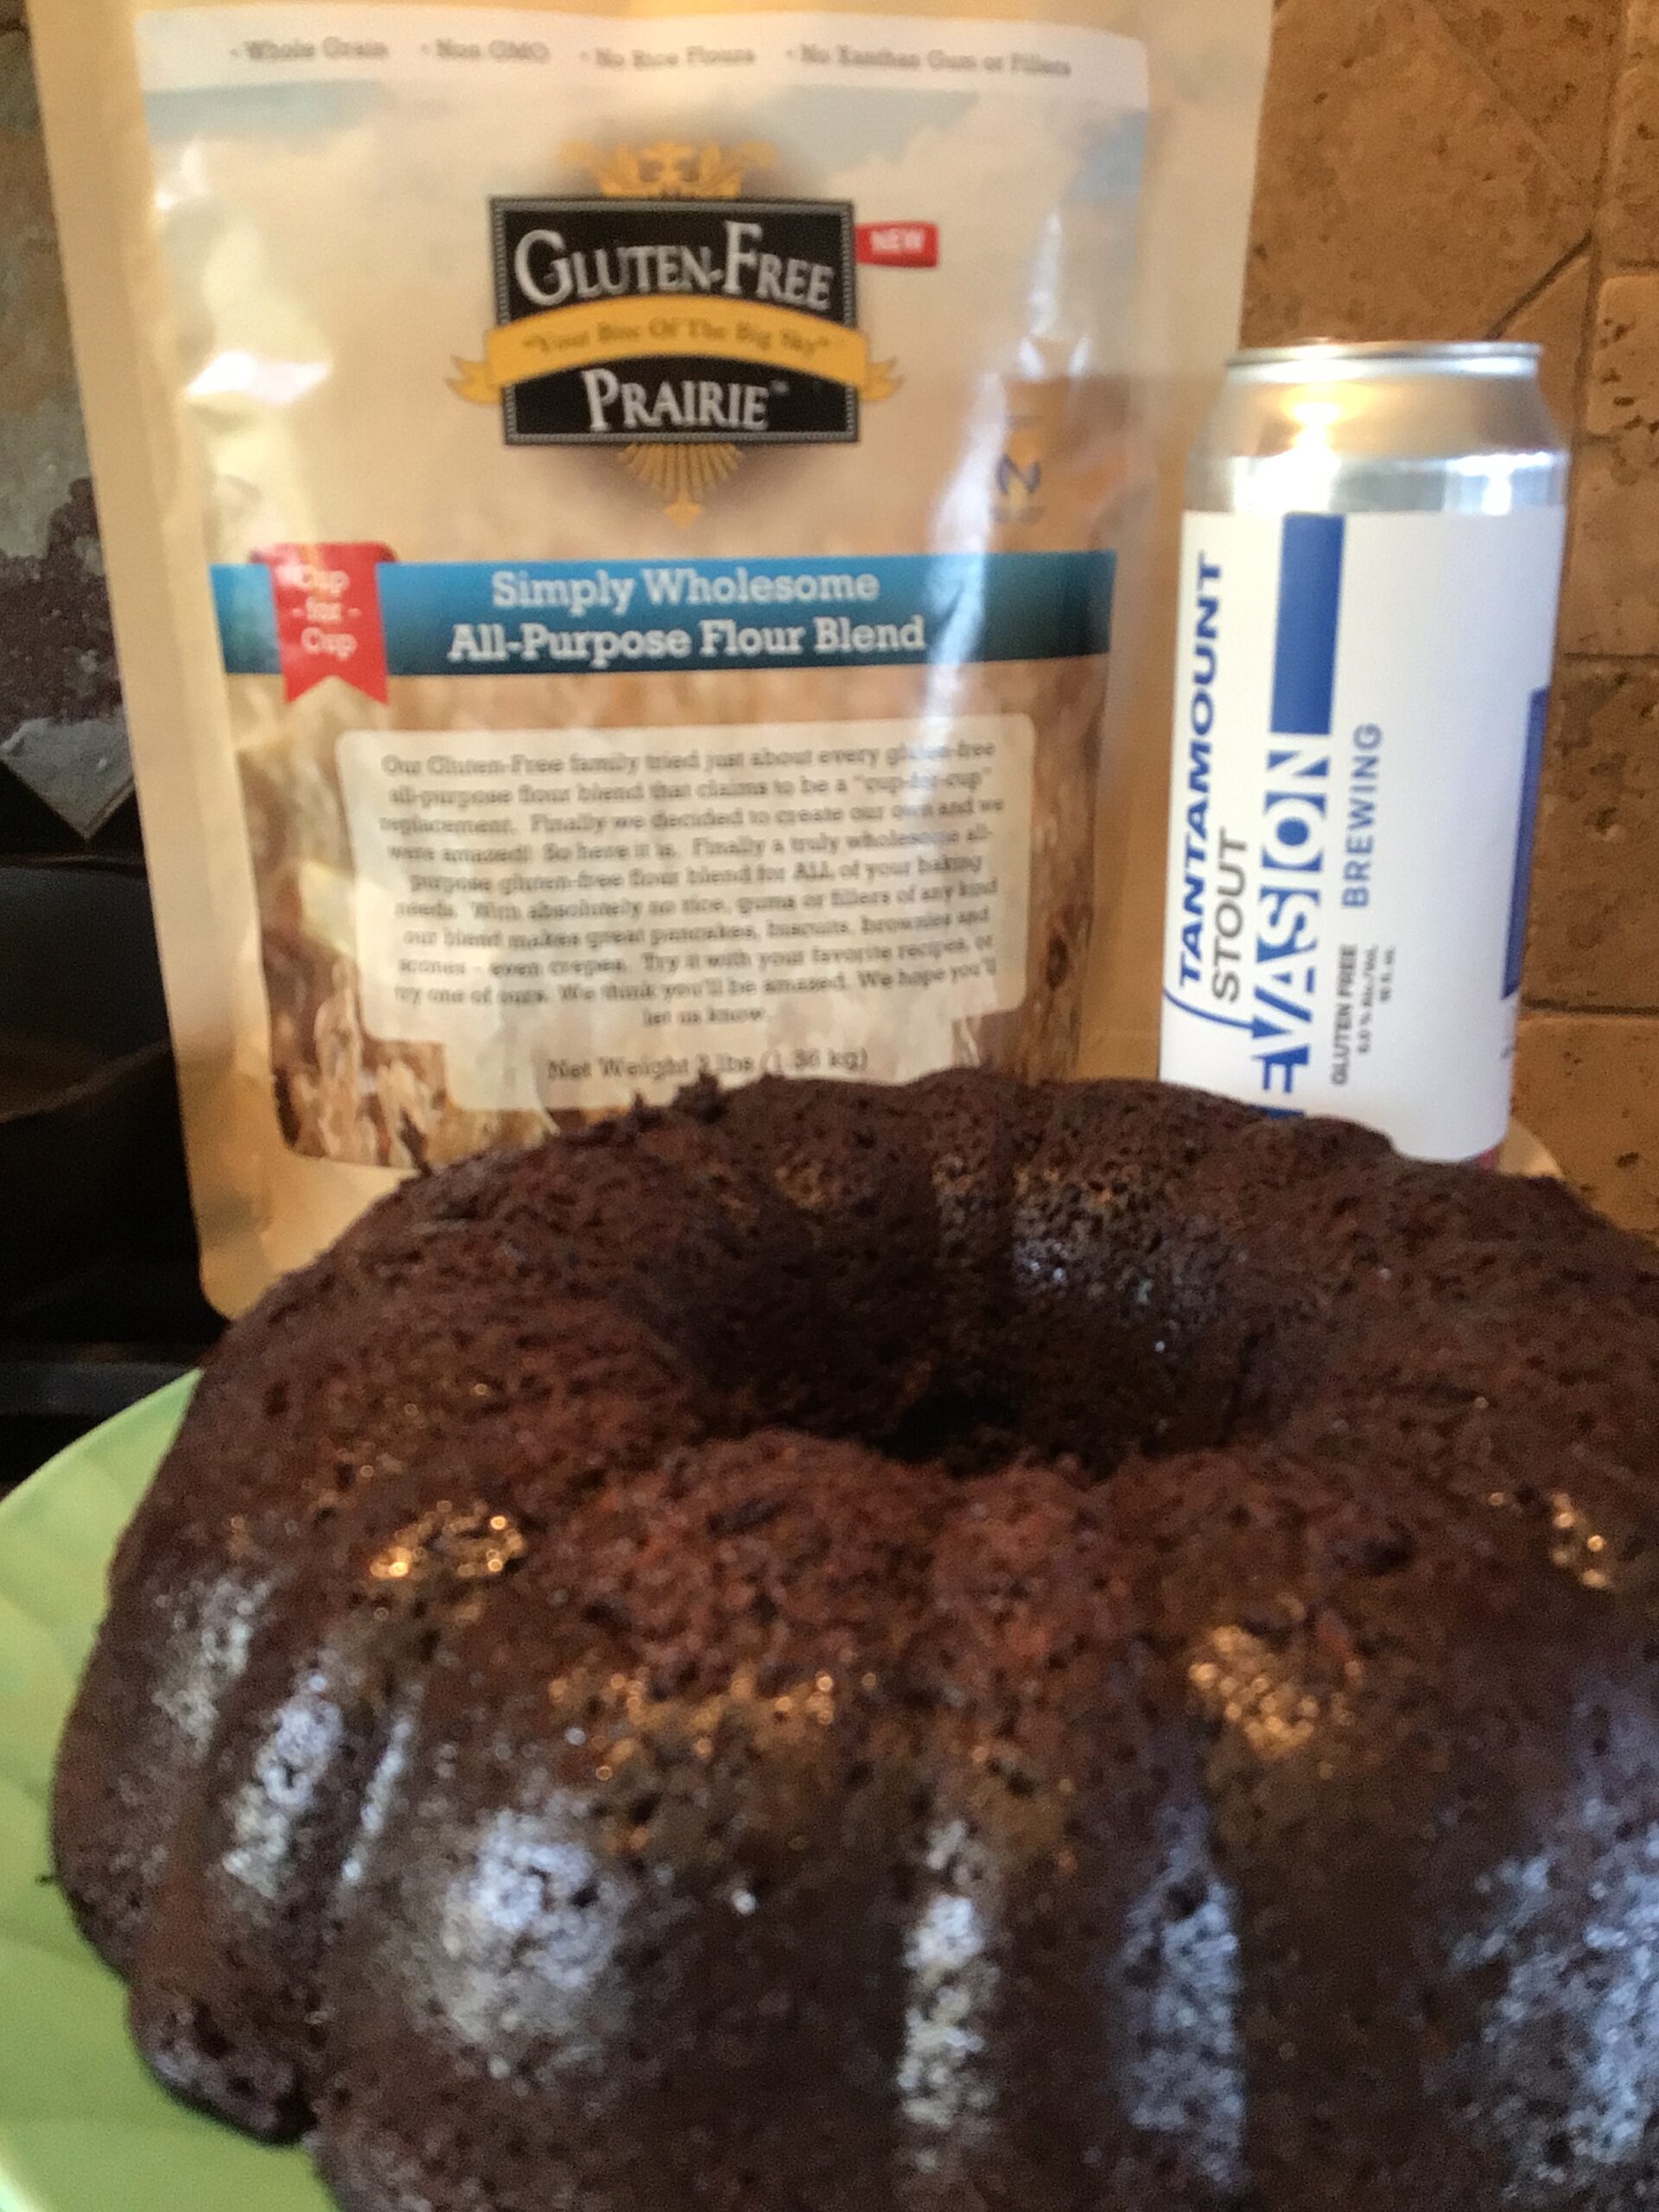 Dark Chocolate Guinness Cake with YES! Real Gluten-Free Stout! -  Gluten-Free Prairie